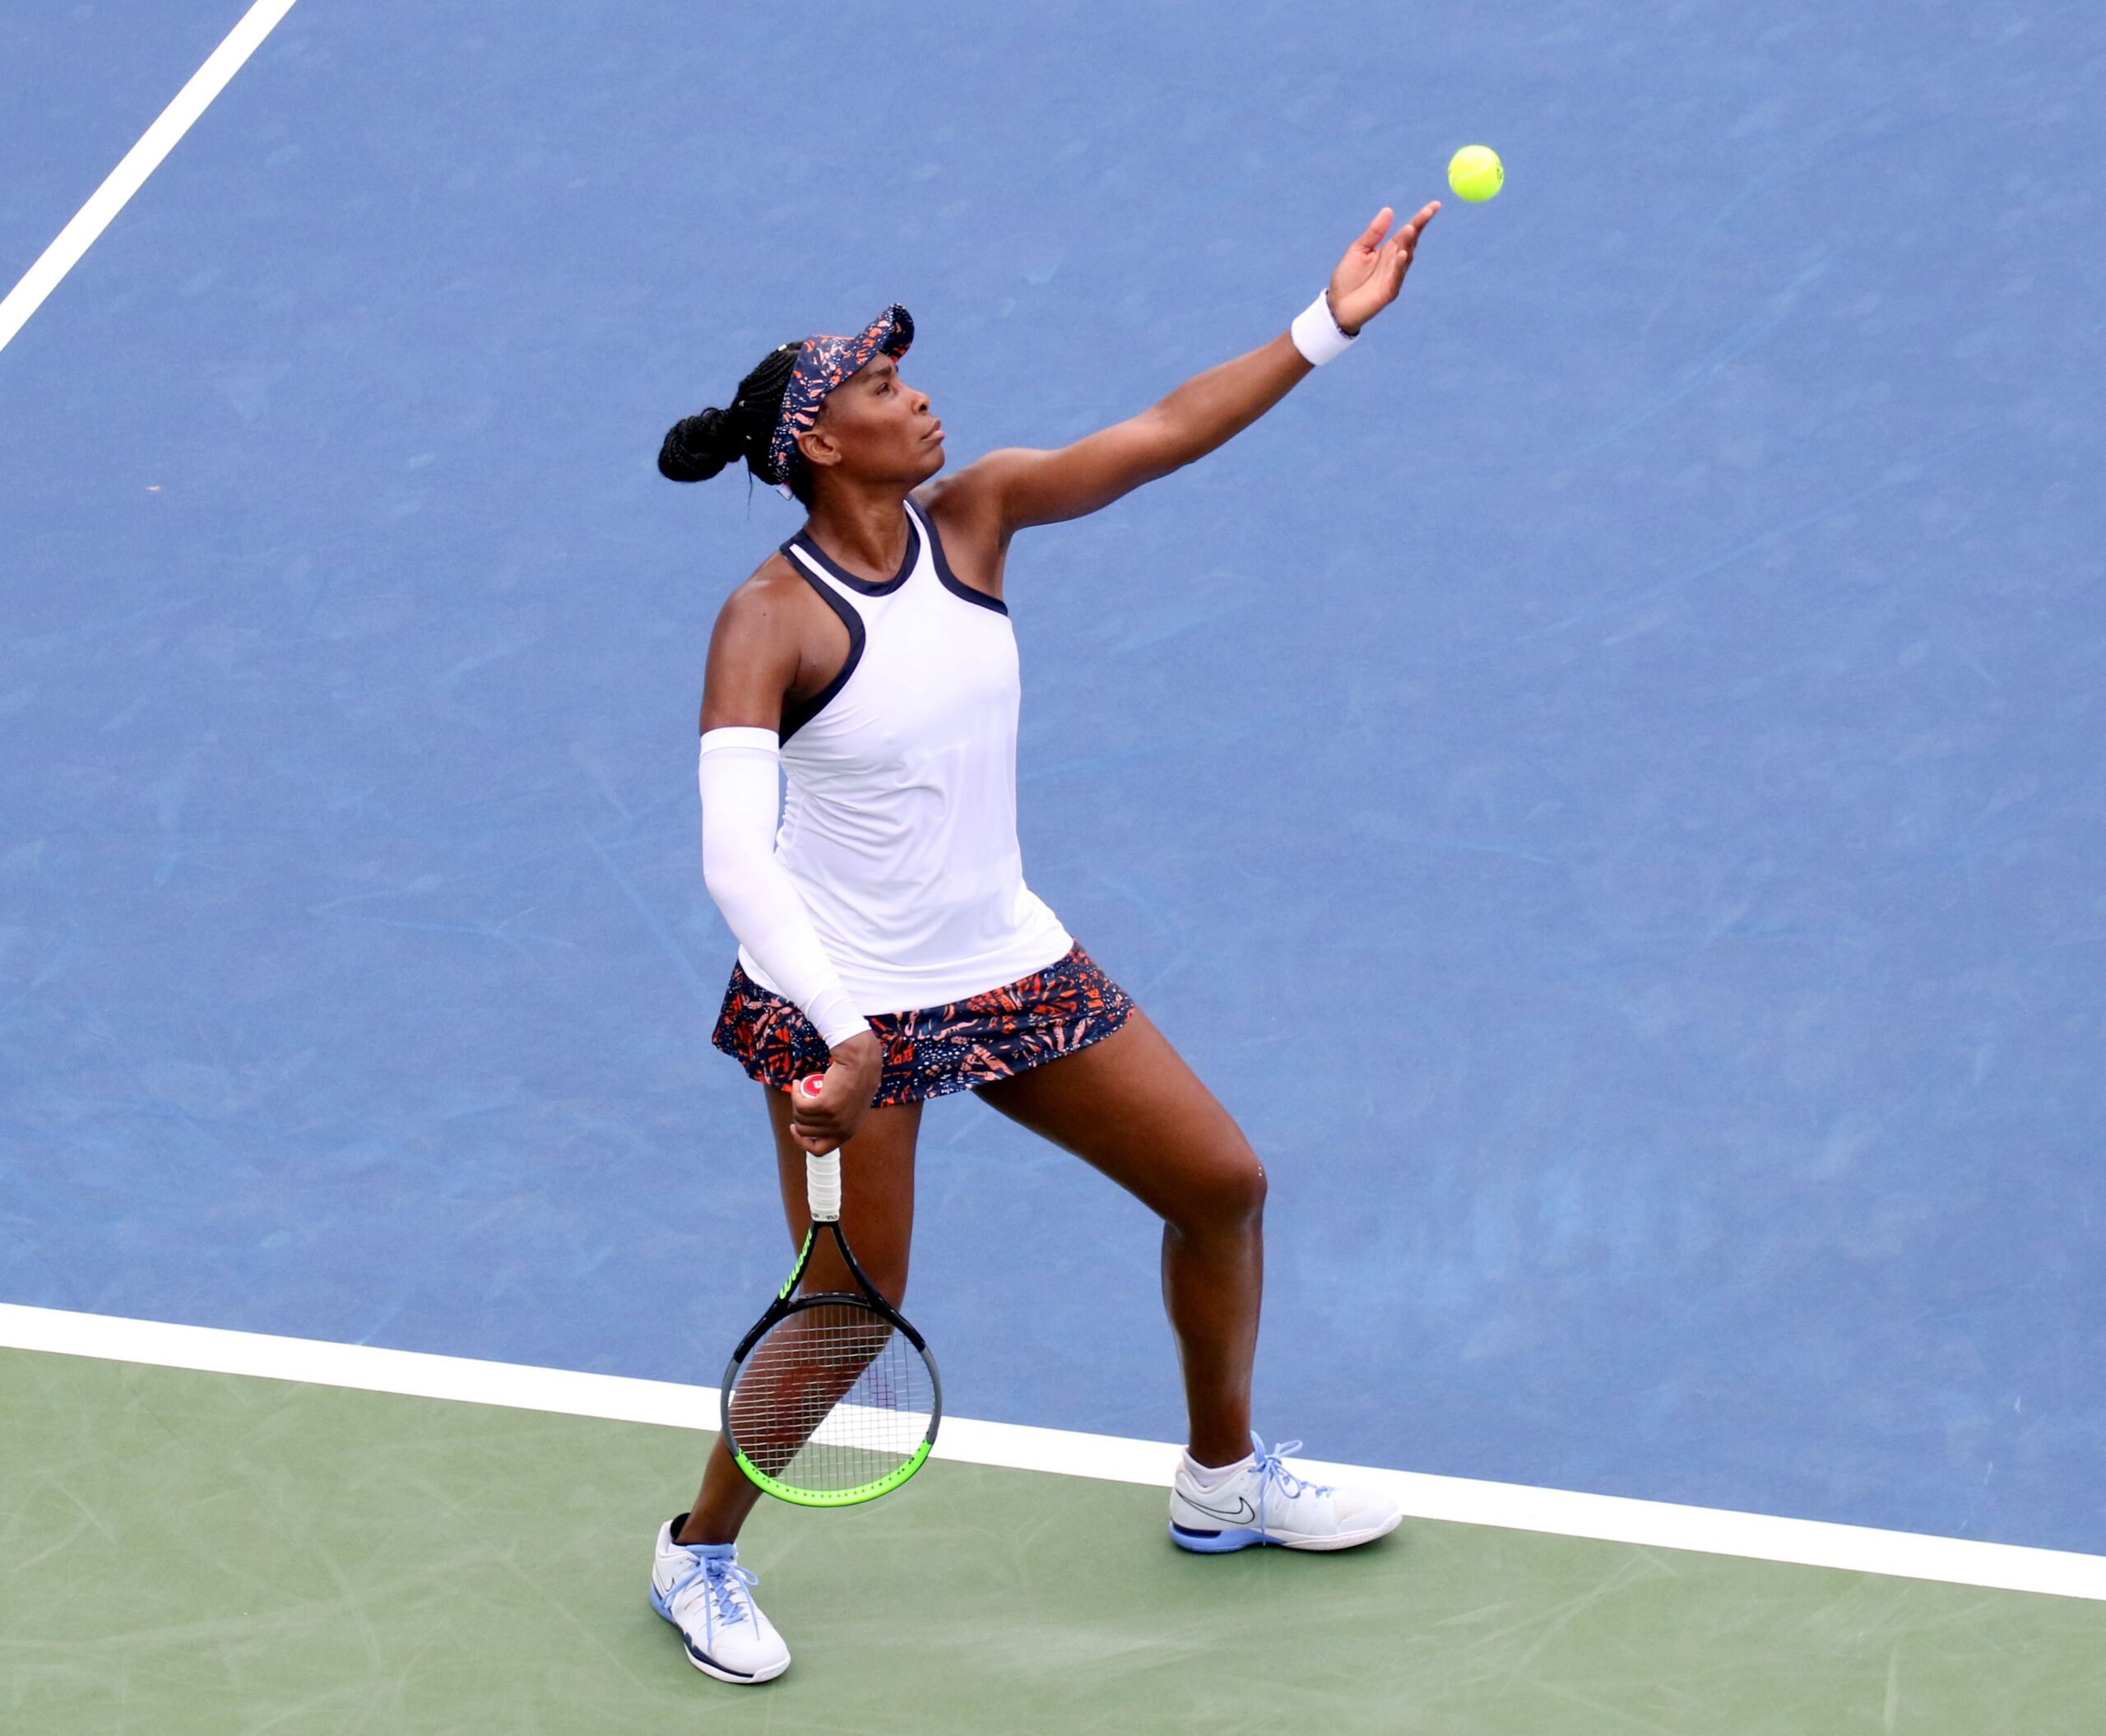 Venus Williams prepares to hit a serve on court